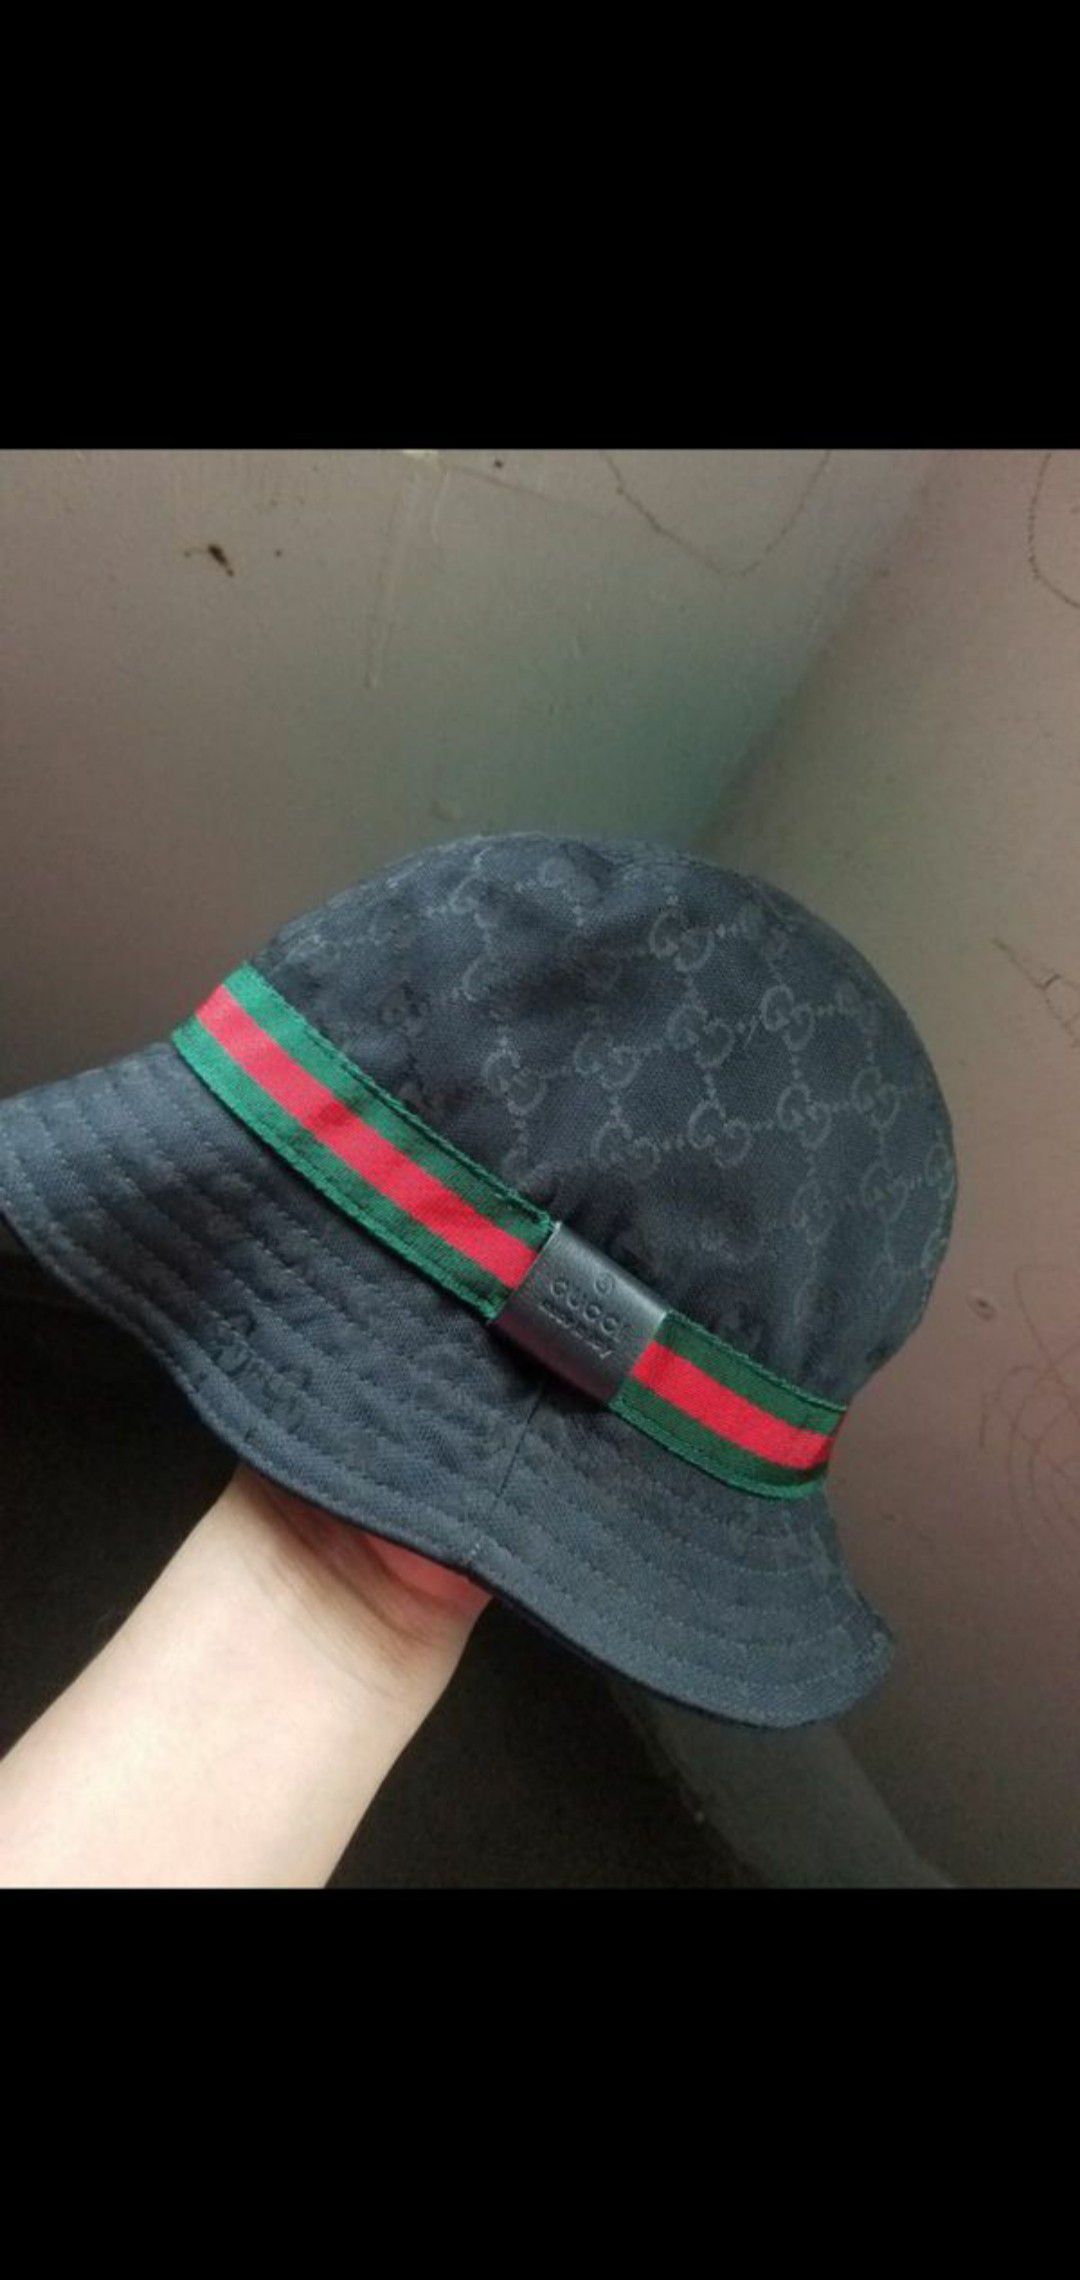 Authentic Gucci Black Canvas Bucket Hat size large